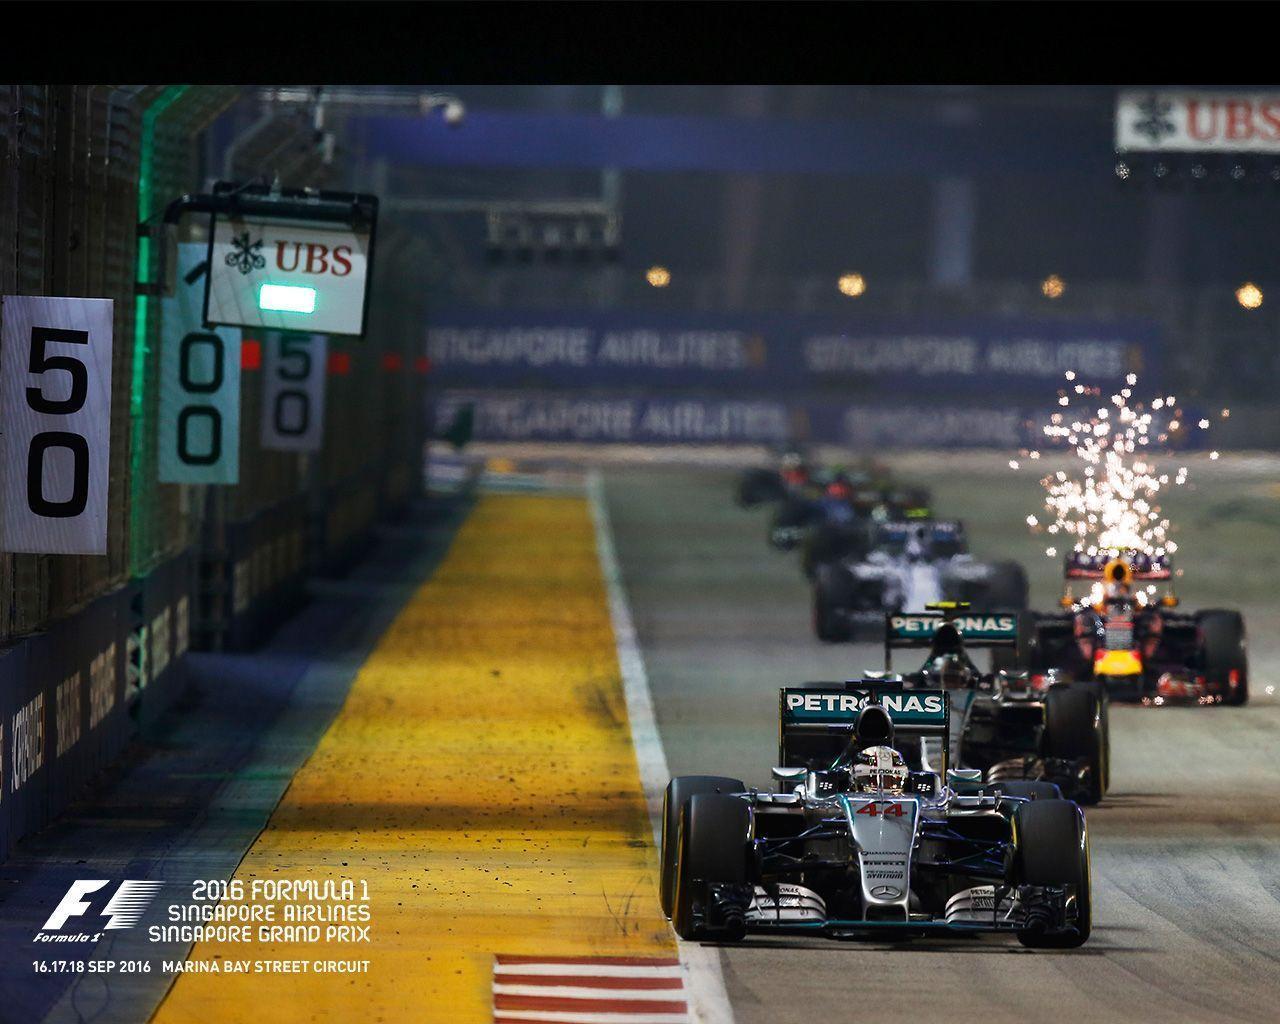 Singapore F1 Formula 1 Night Race